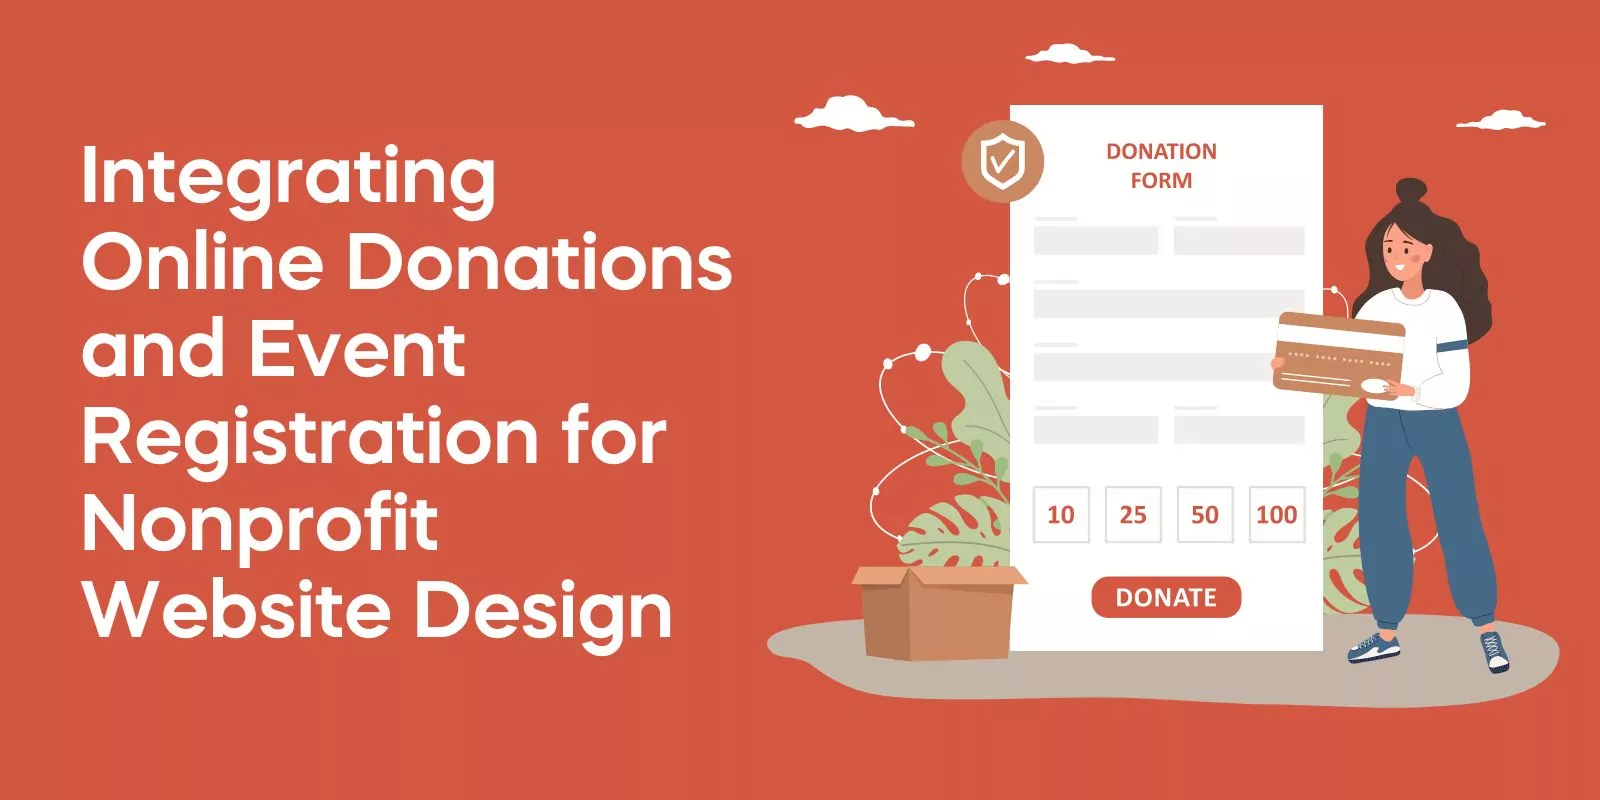 Integrating Online Donations and Event Registration for Nonprofit Website Design